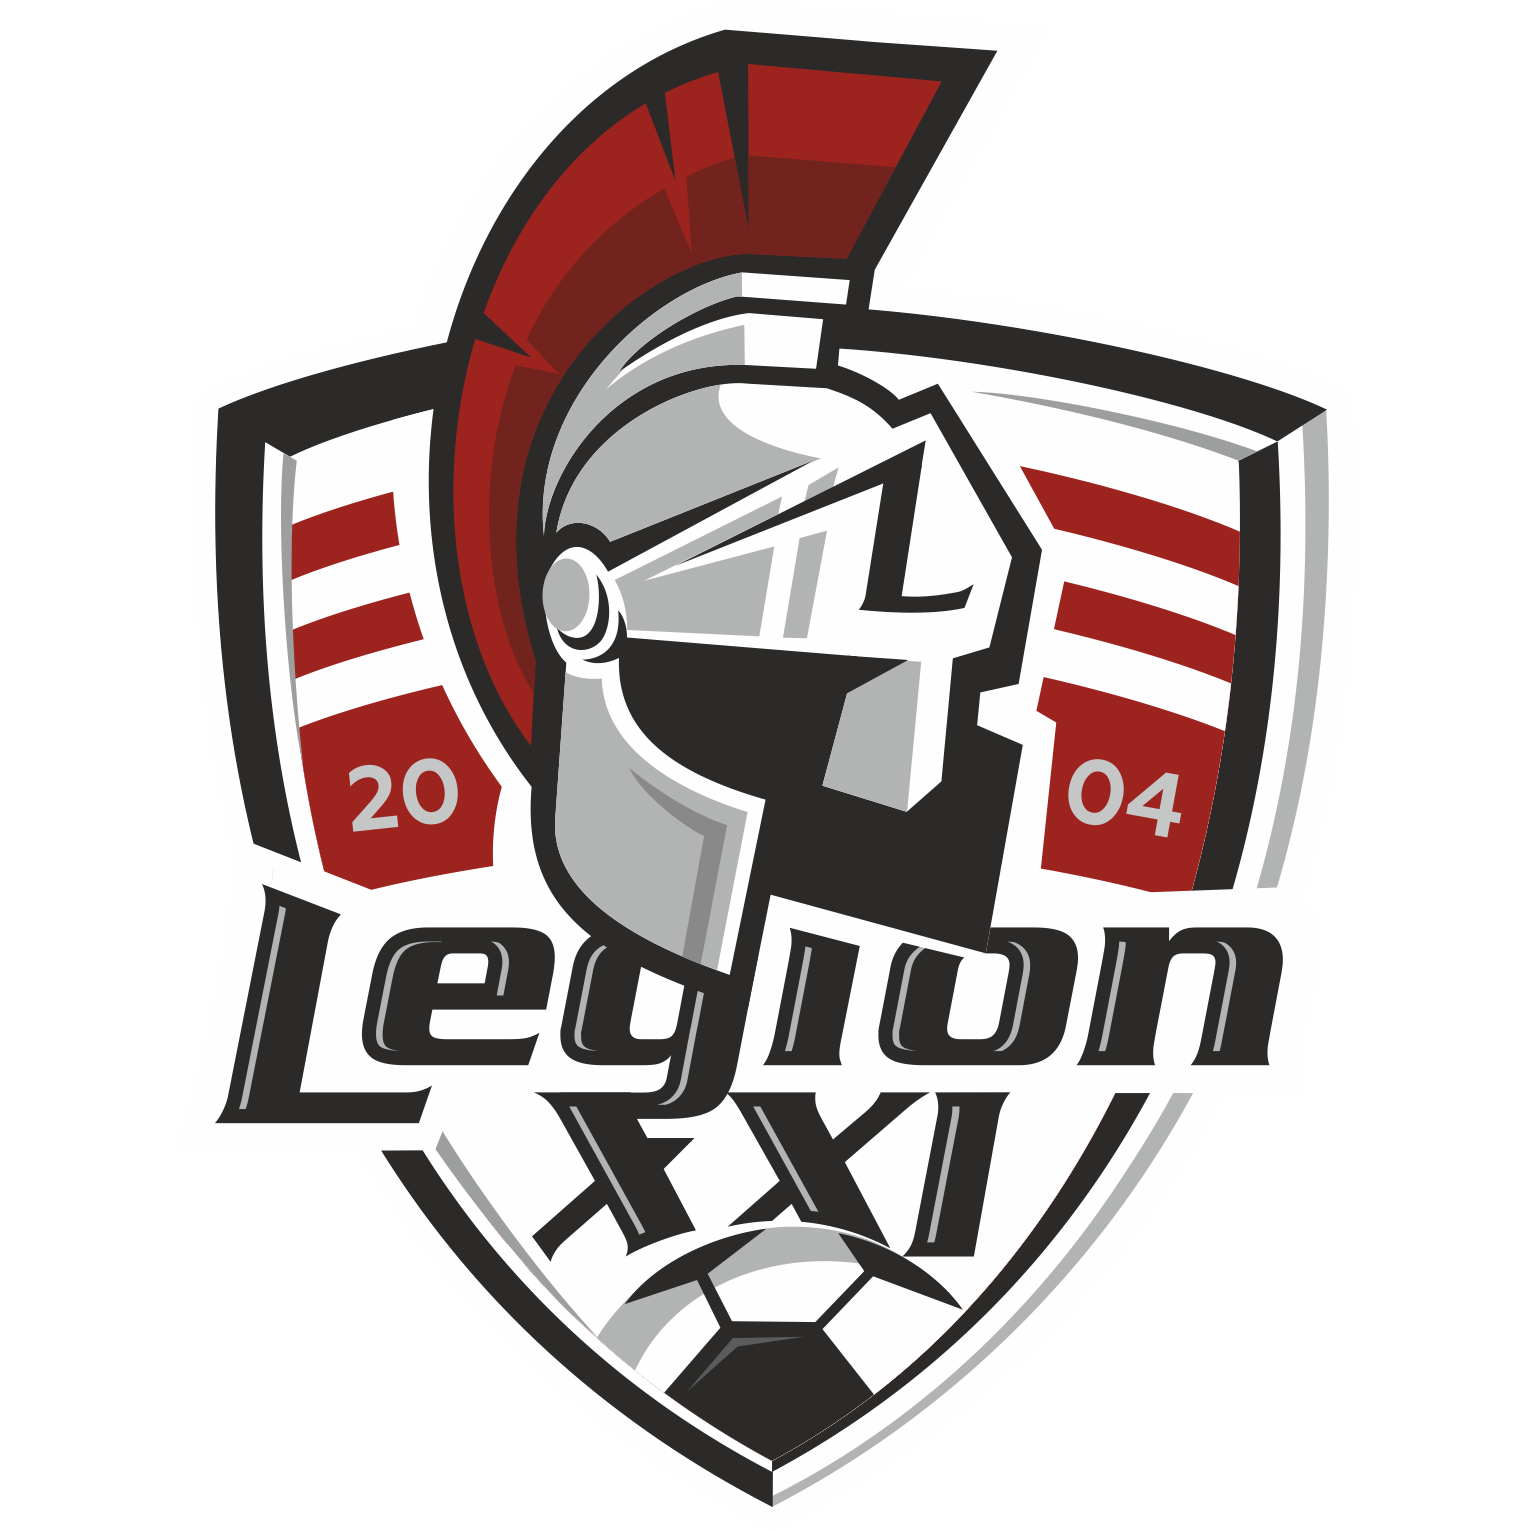 Legion XXI